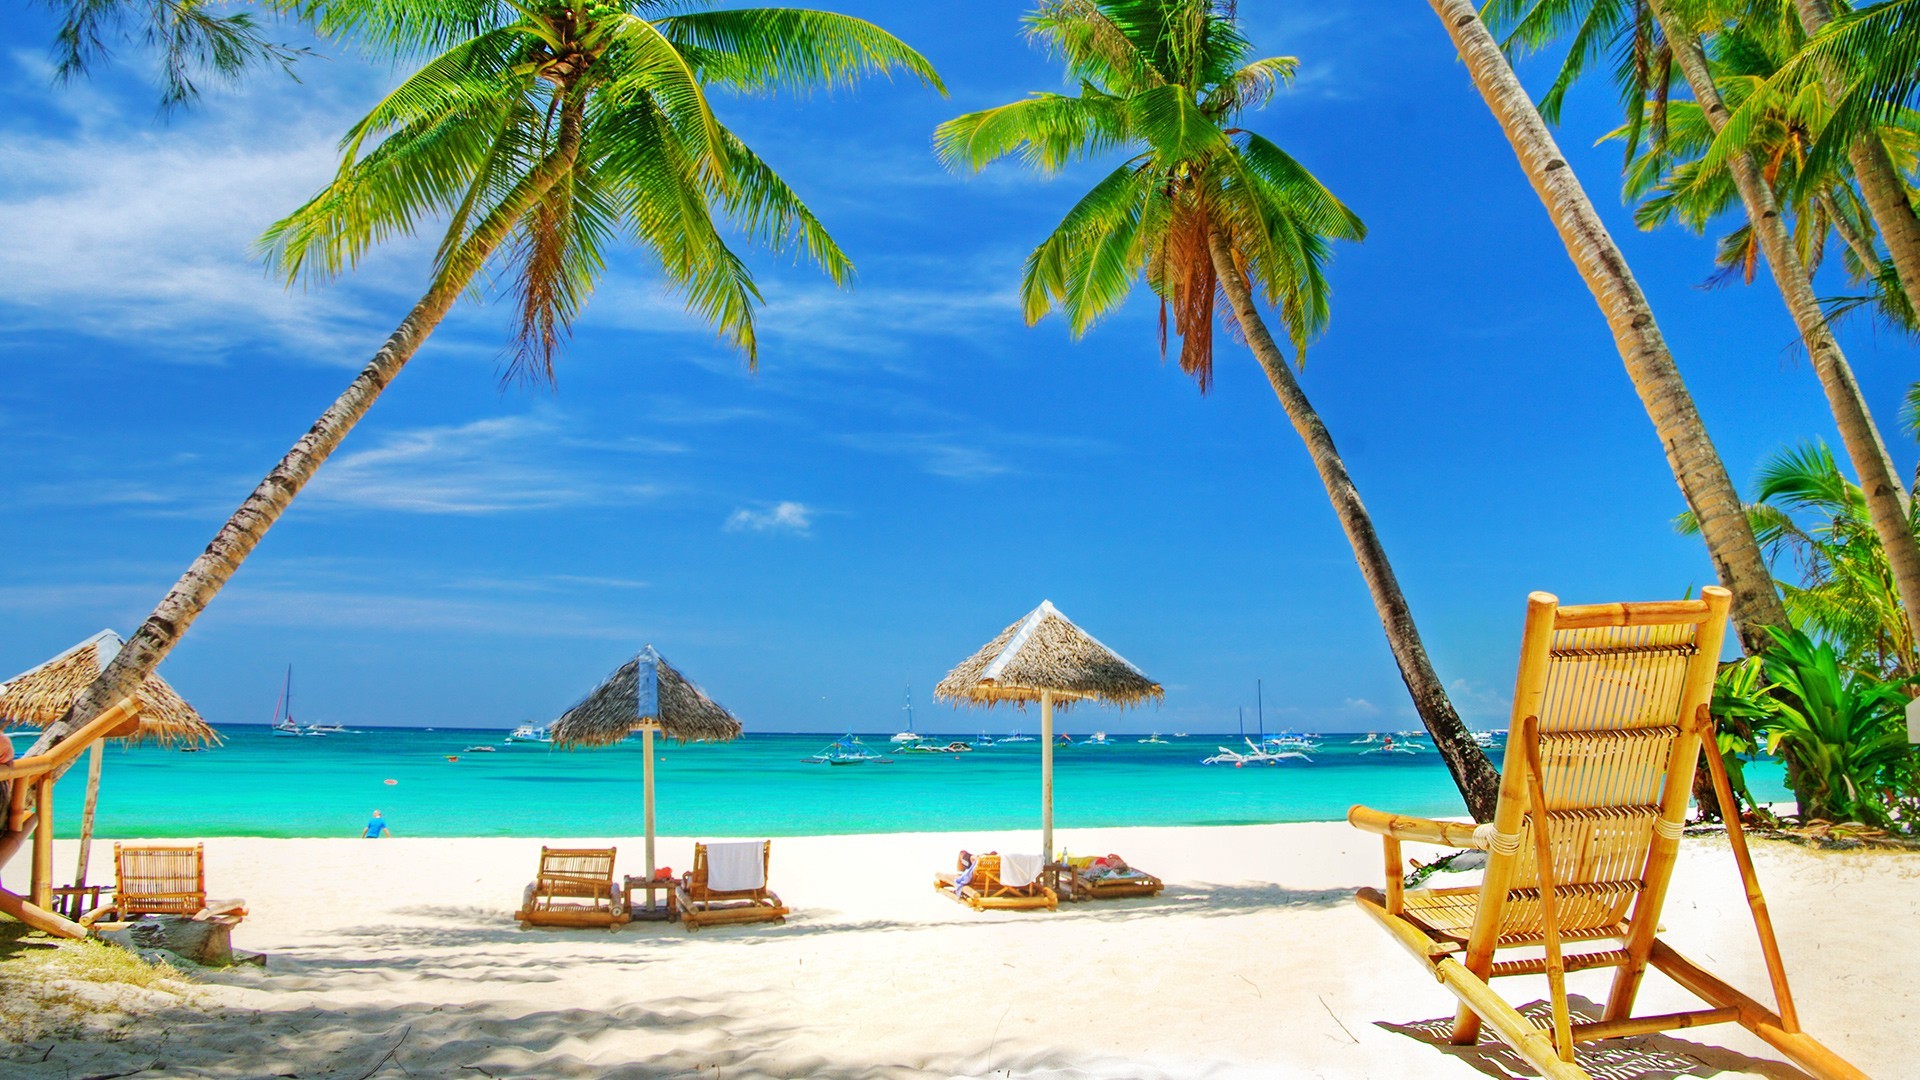 Sea Palm Trees Deck Chairs Beach Umbrella Beach Tropical Daylight Sand 1920x1080